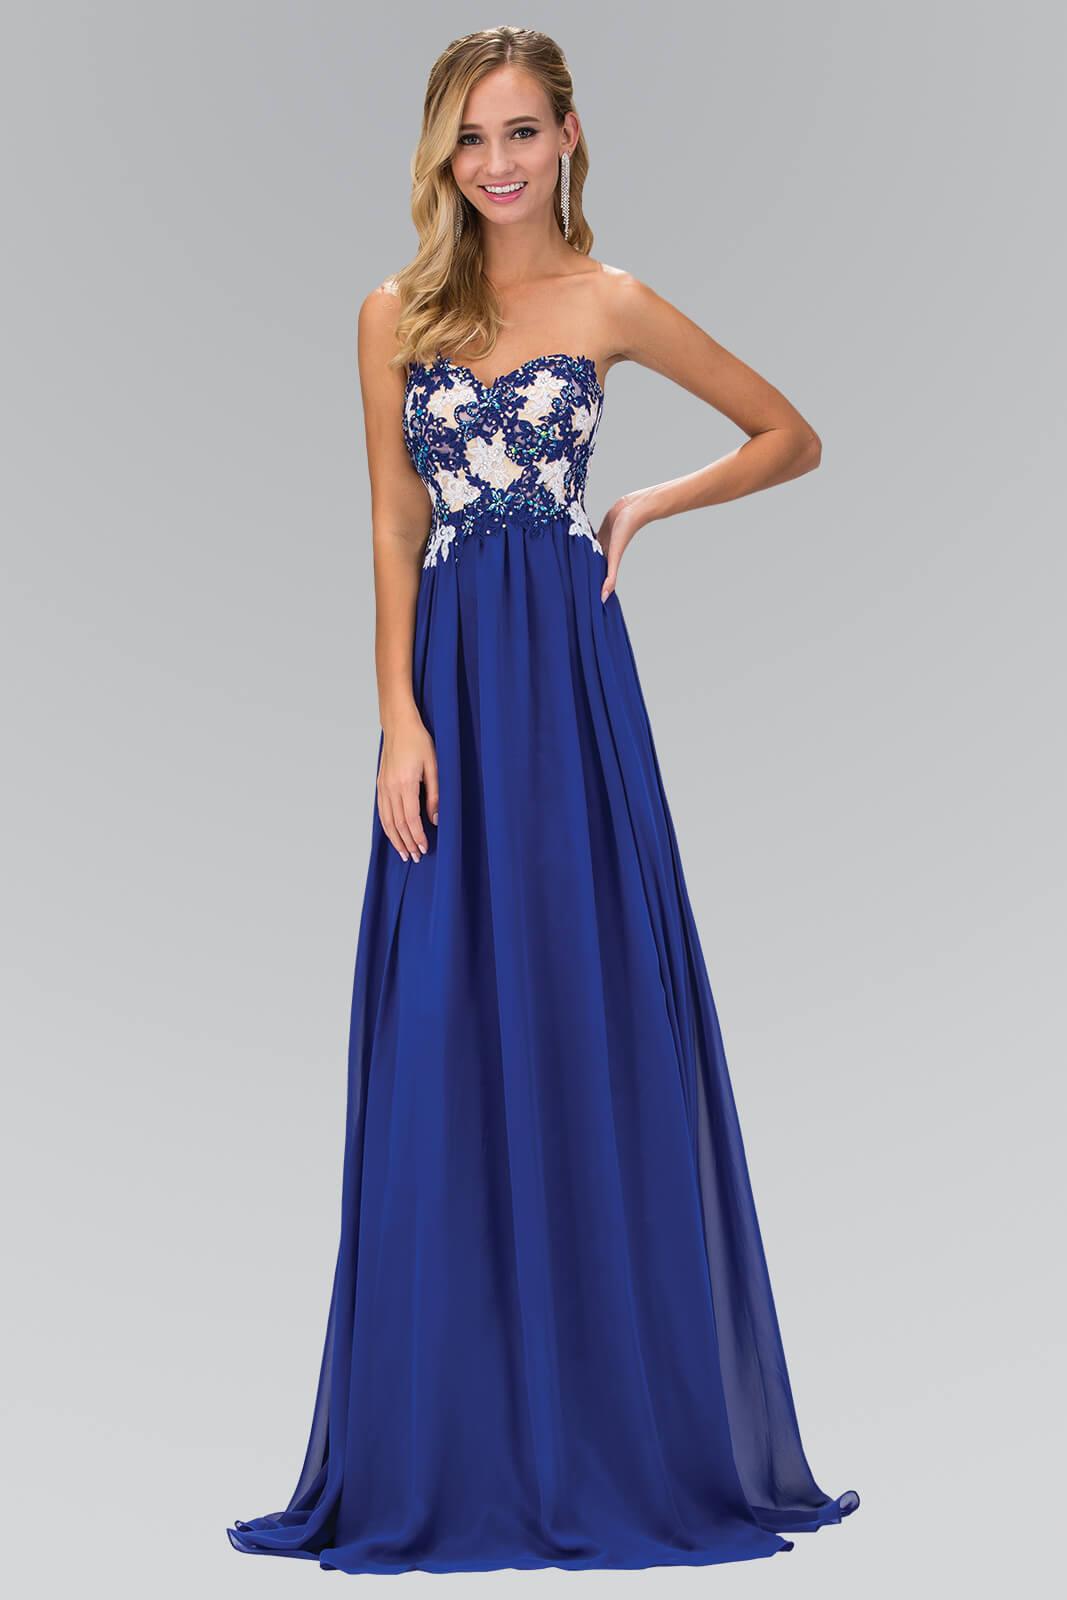 Prom Strapless Sweetheart Chiffon Long Formal Dress - The Dress Outlet Elizabeth K